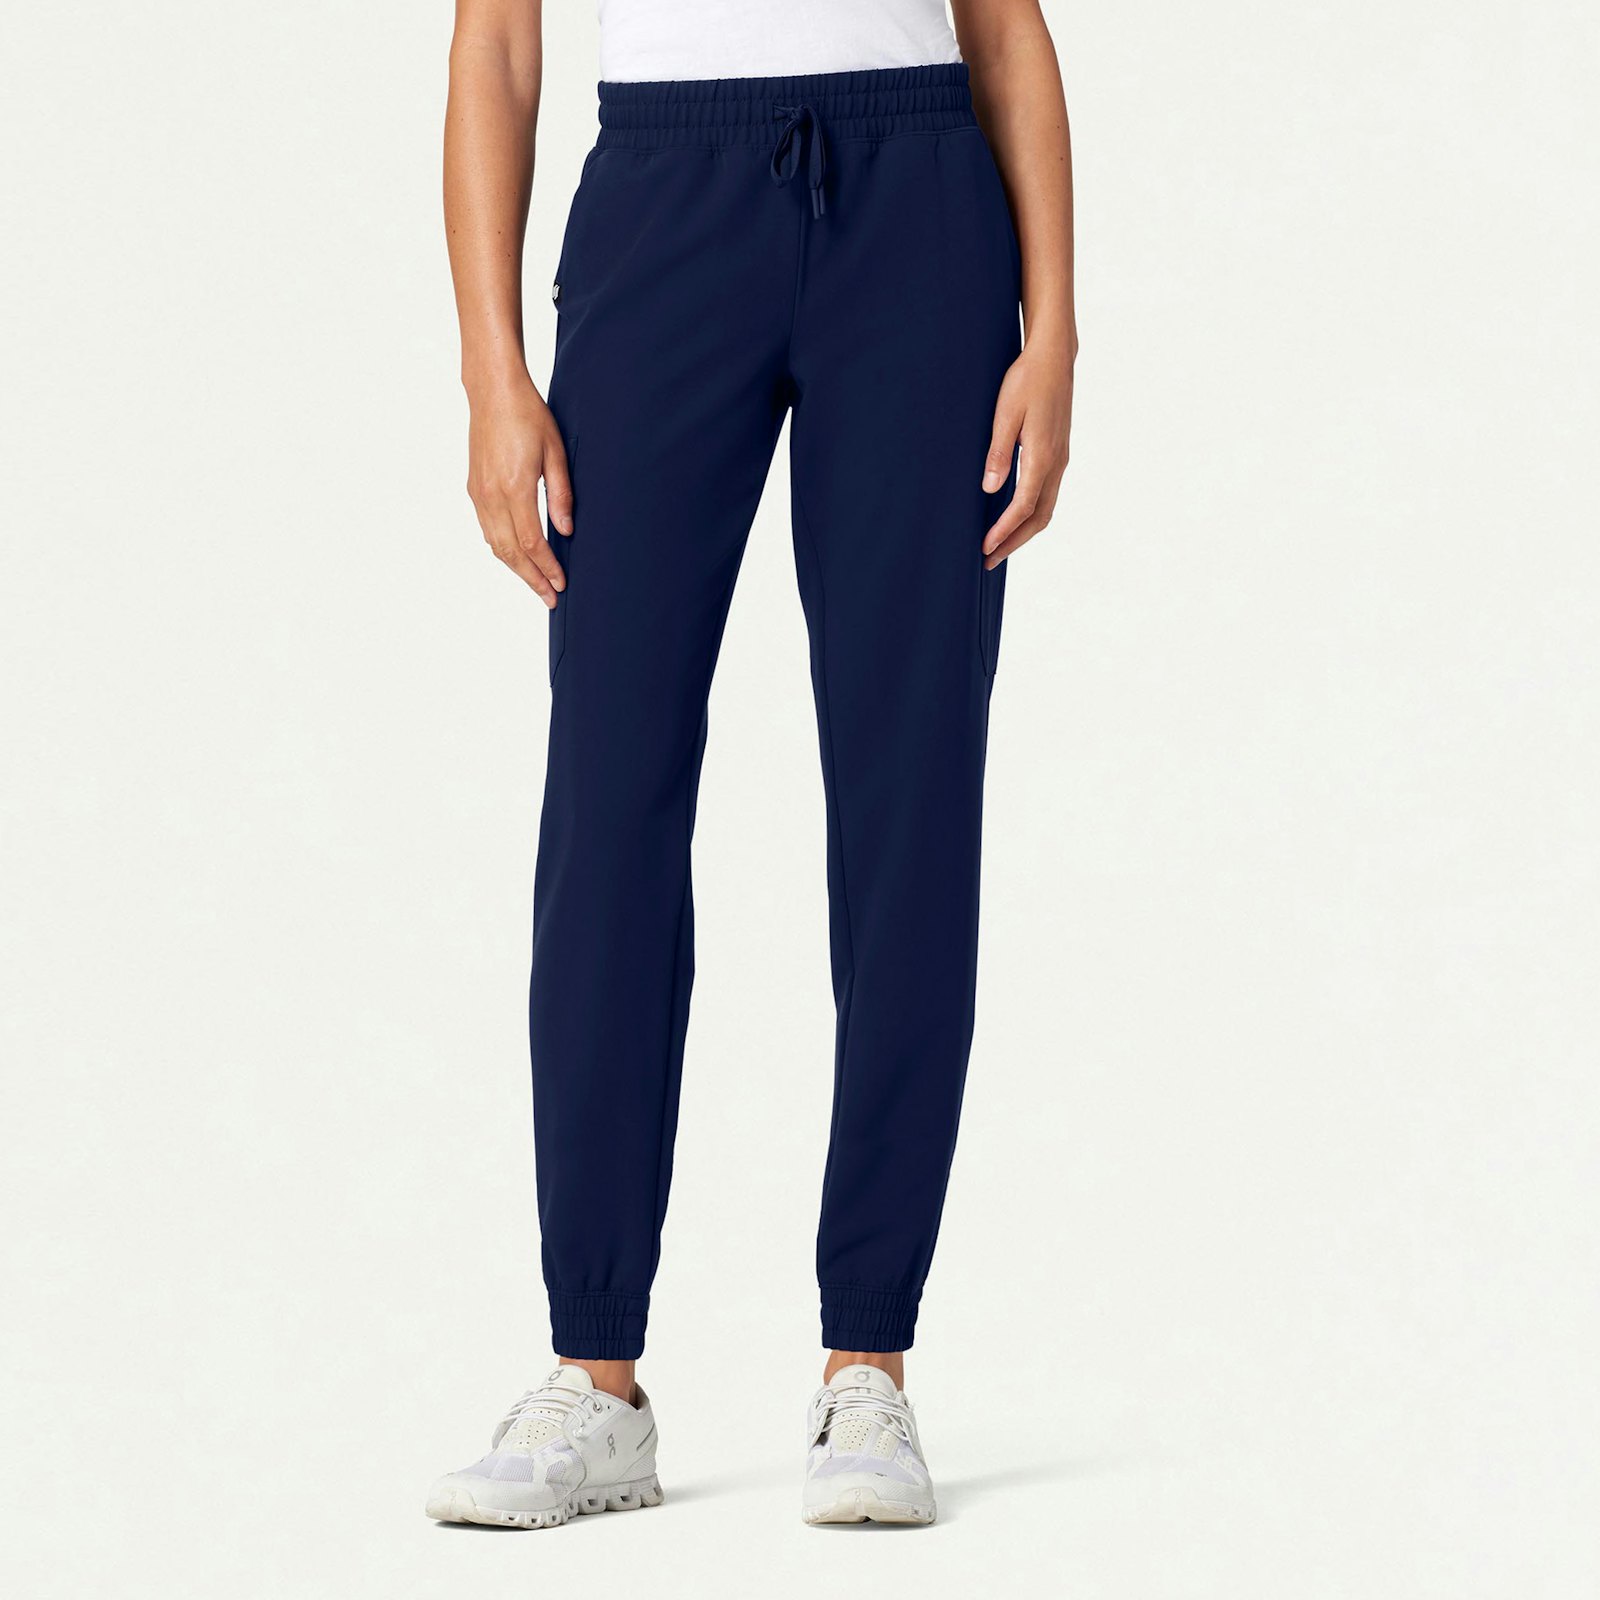 Women's joggers sweatpants - navy blue